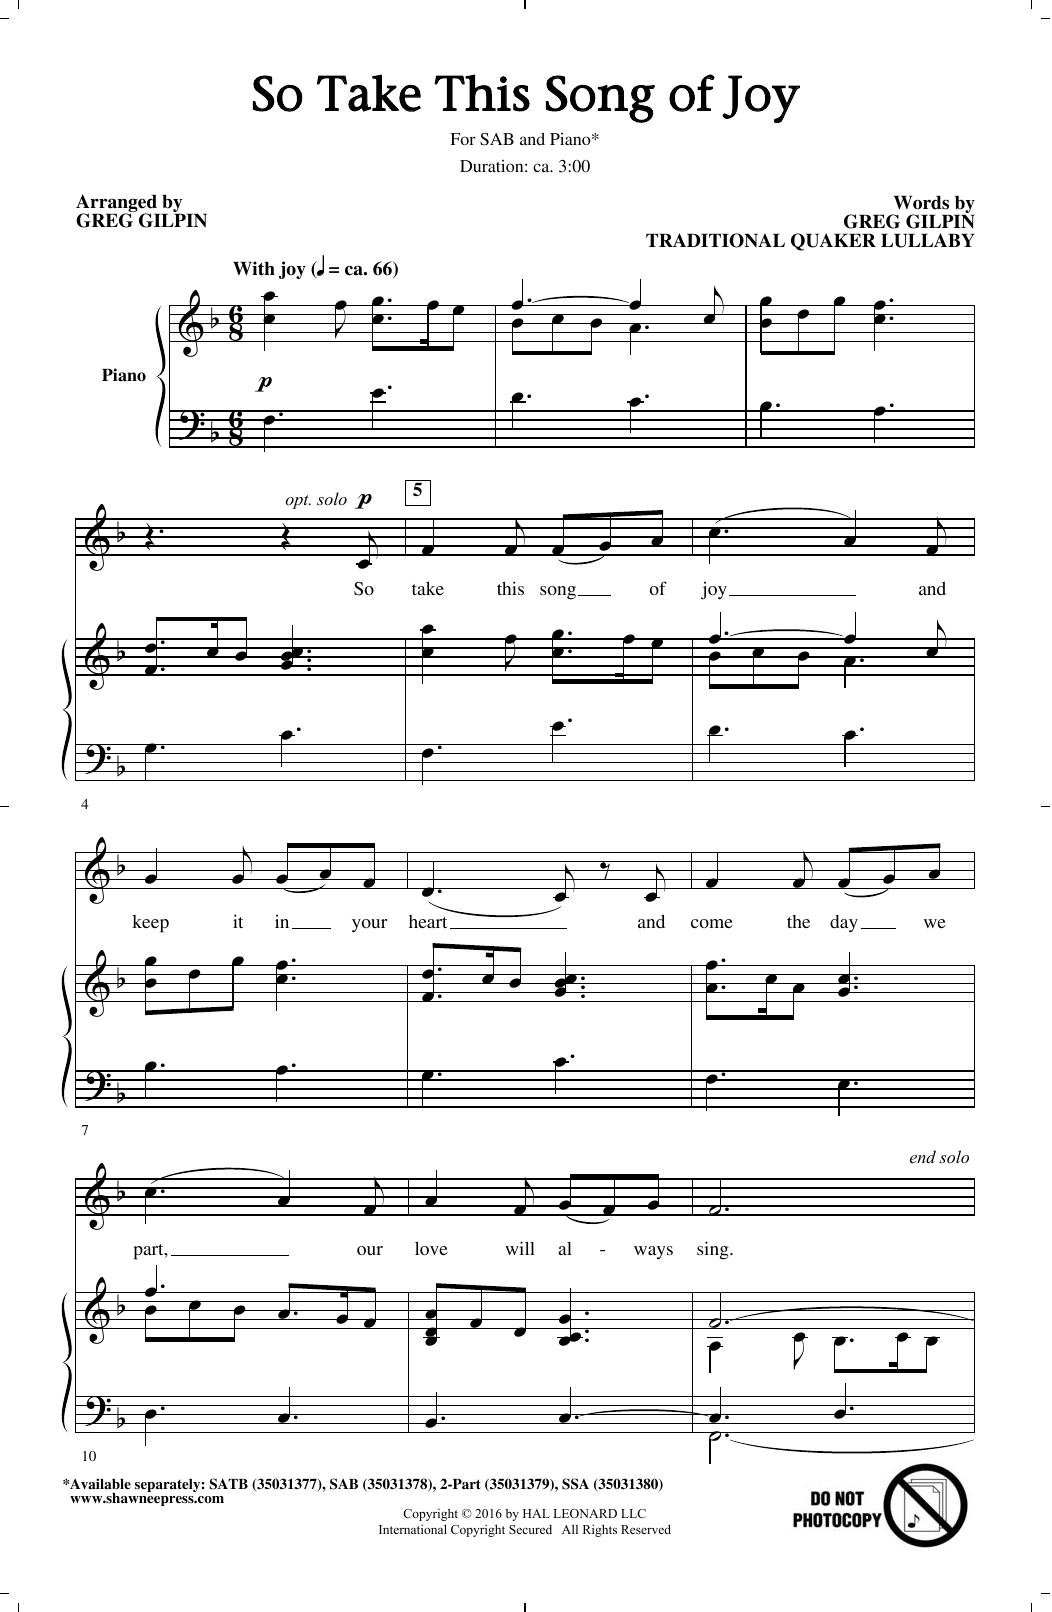 Greg Gilpin So Take This Song Of Joy Sheet Music Notes & Chords for SAB - Download or Print PDF